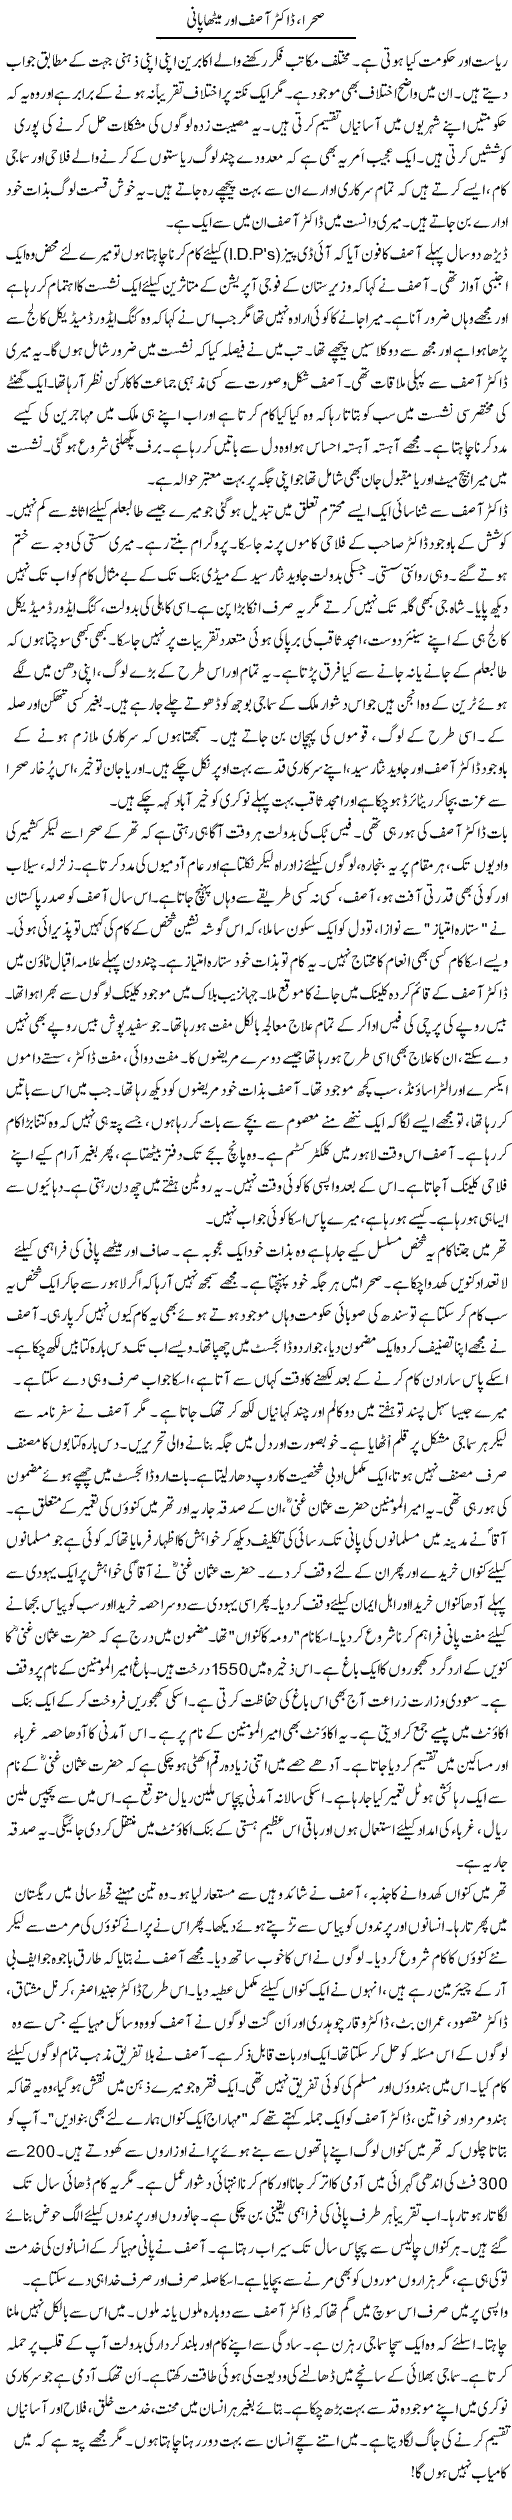 Sehraa, Dr. Asif Aor Meetha Pani | Rao Manzar Hayat | Daily Urdu Columns